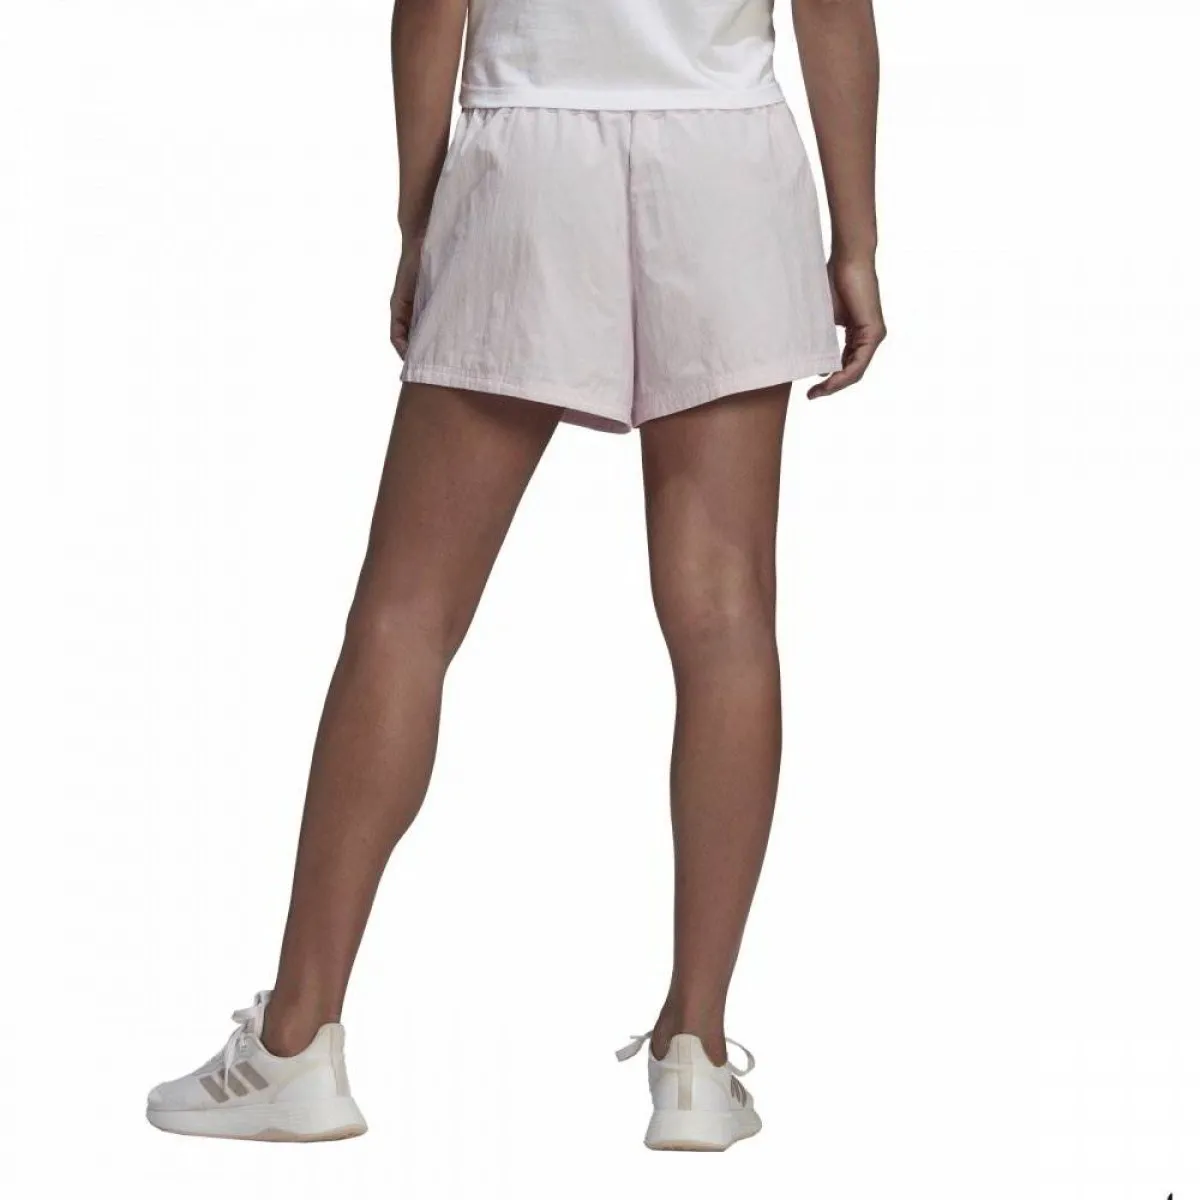 adidas Sporthose kurz Damen hellviolett/weiß